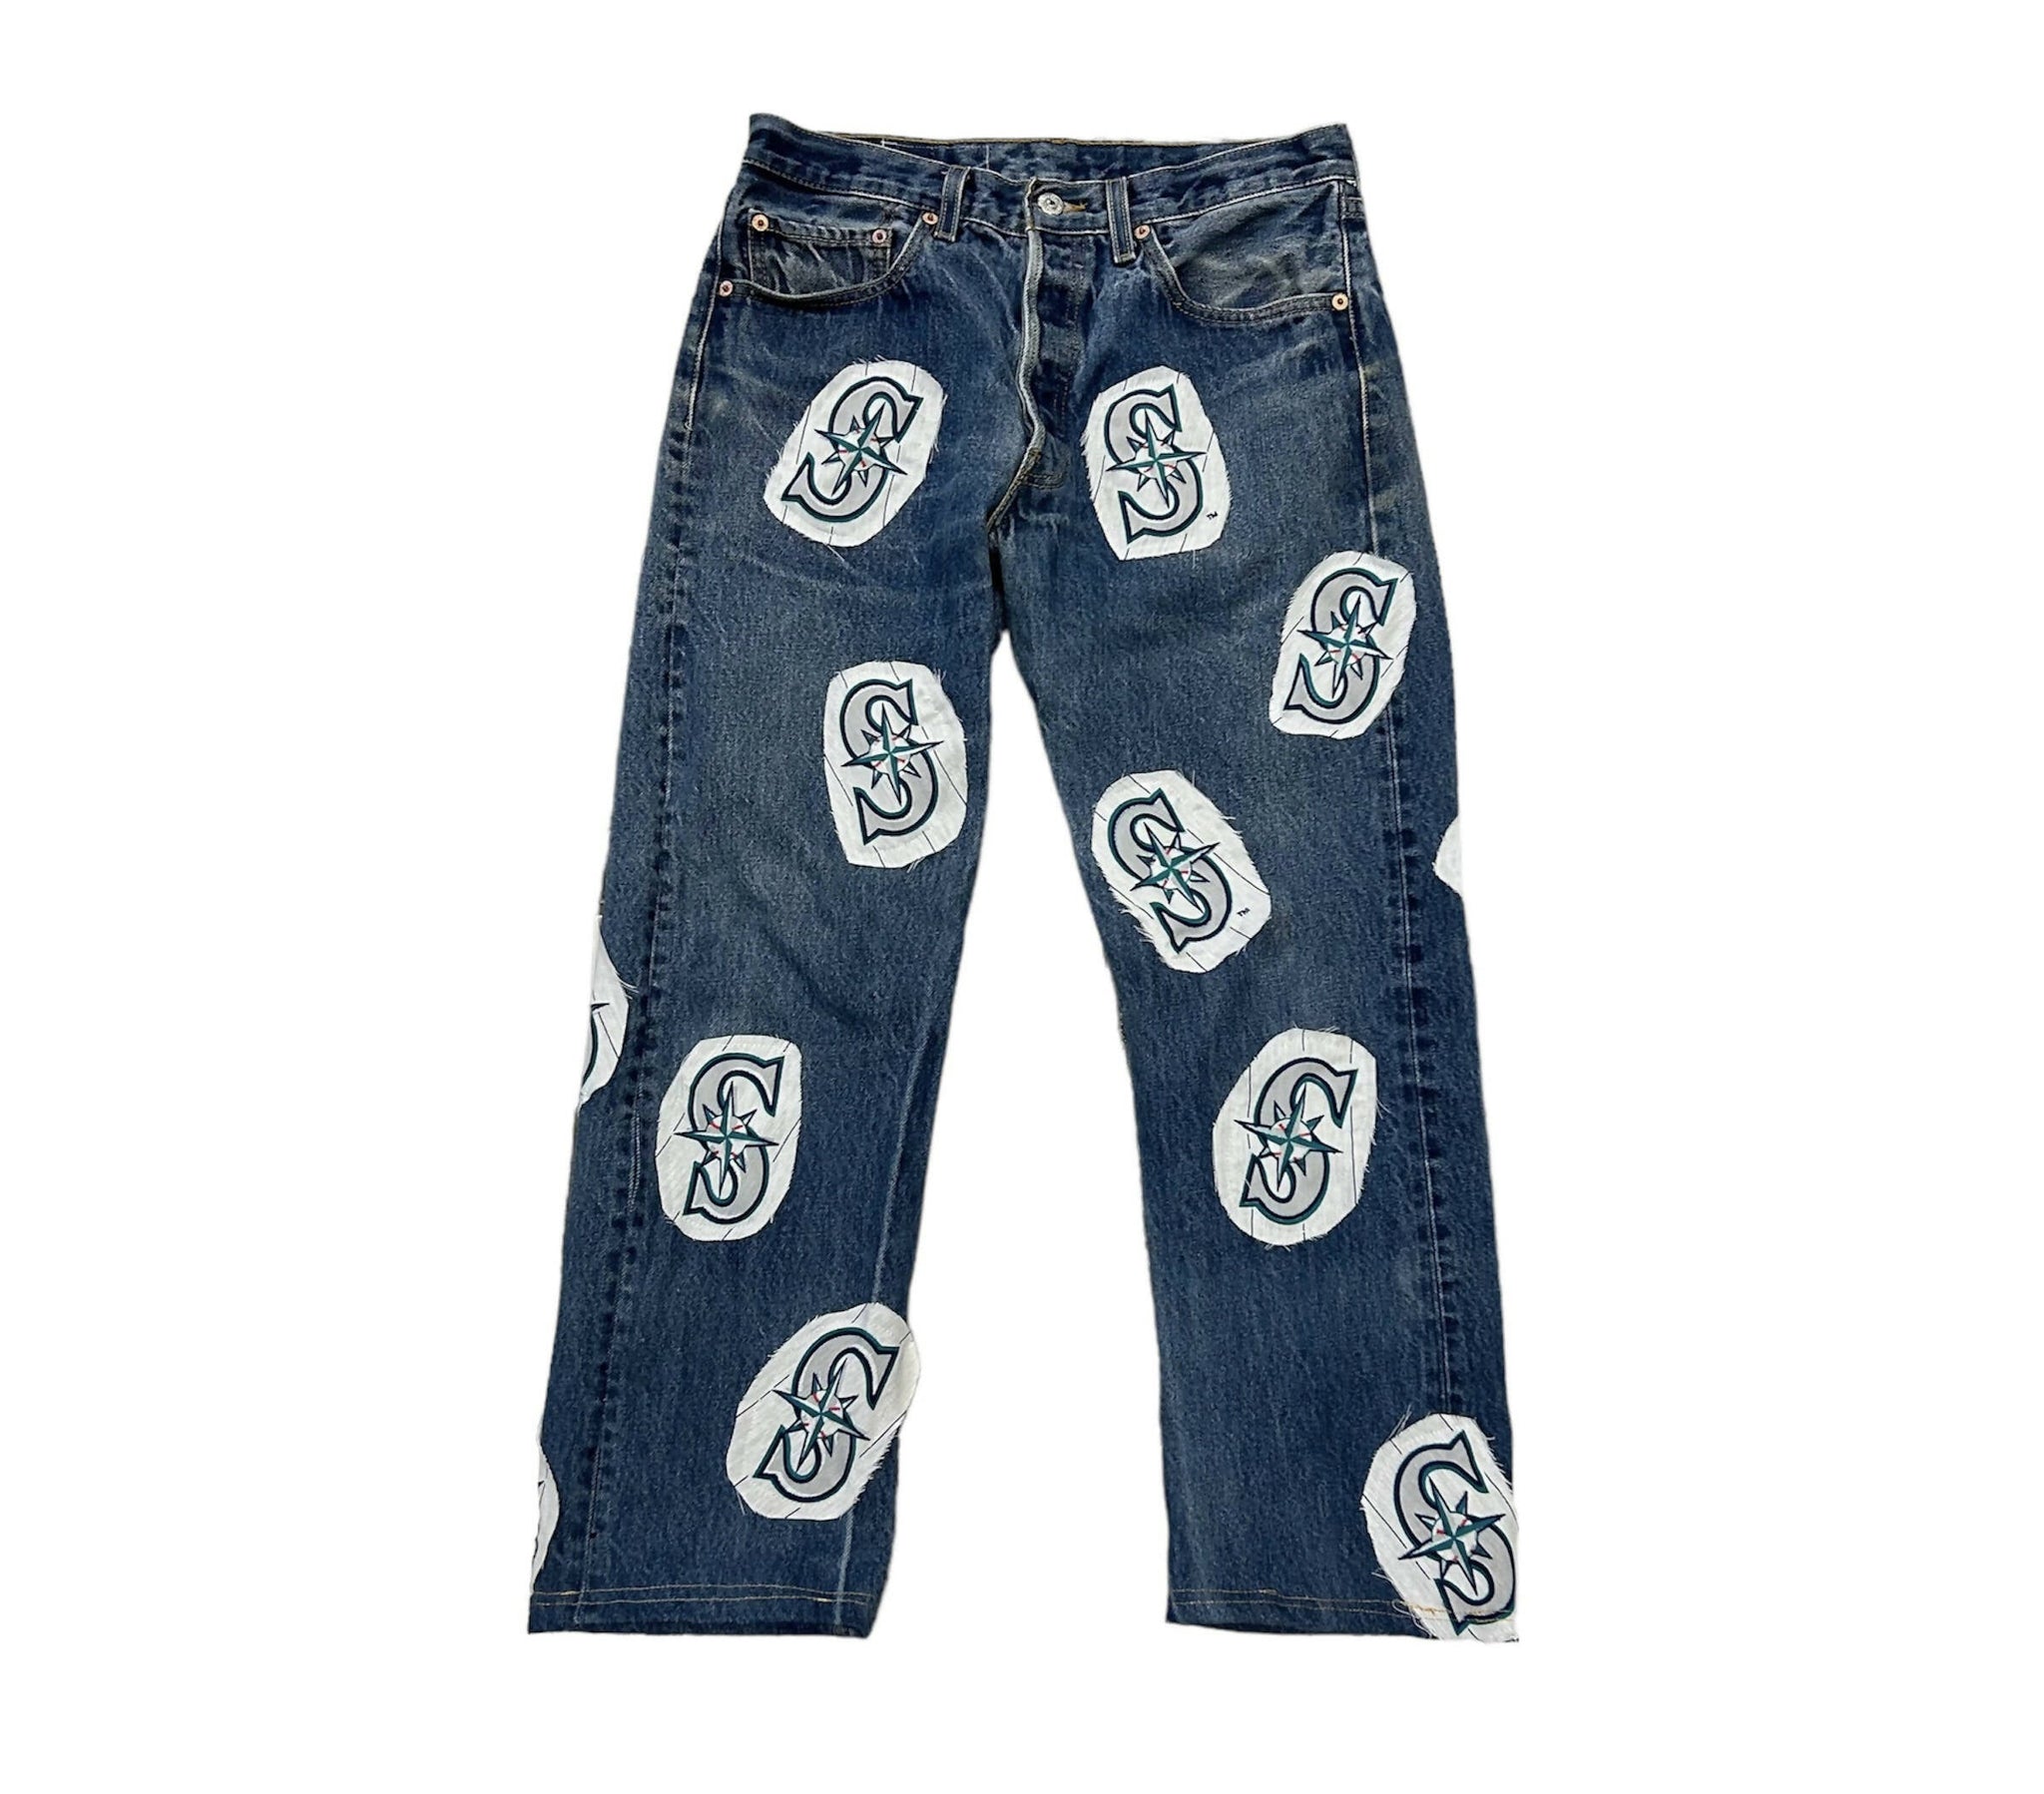 “Mariner$” Patchwork jeans [30x28]